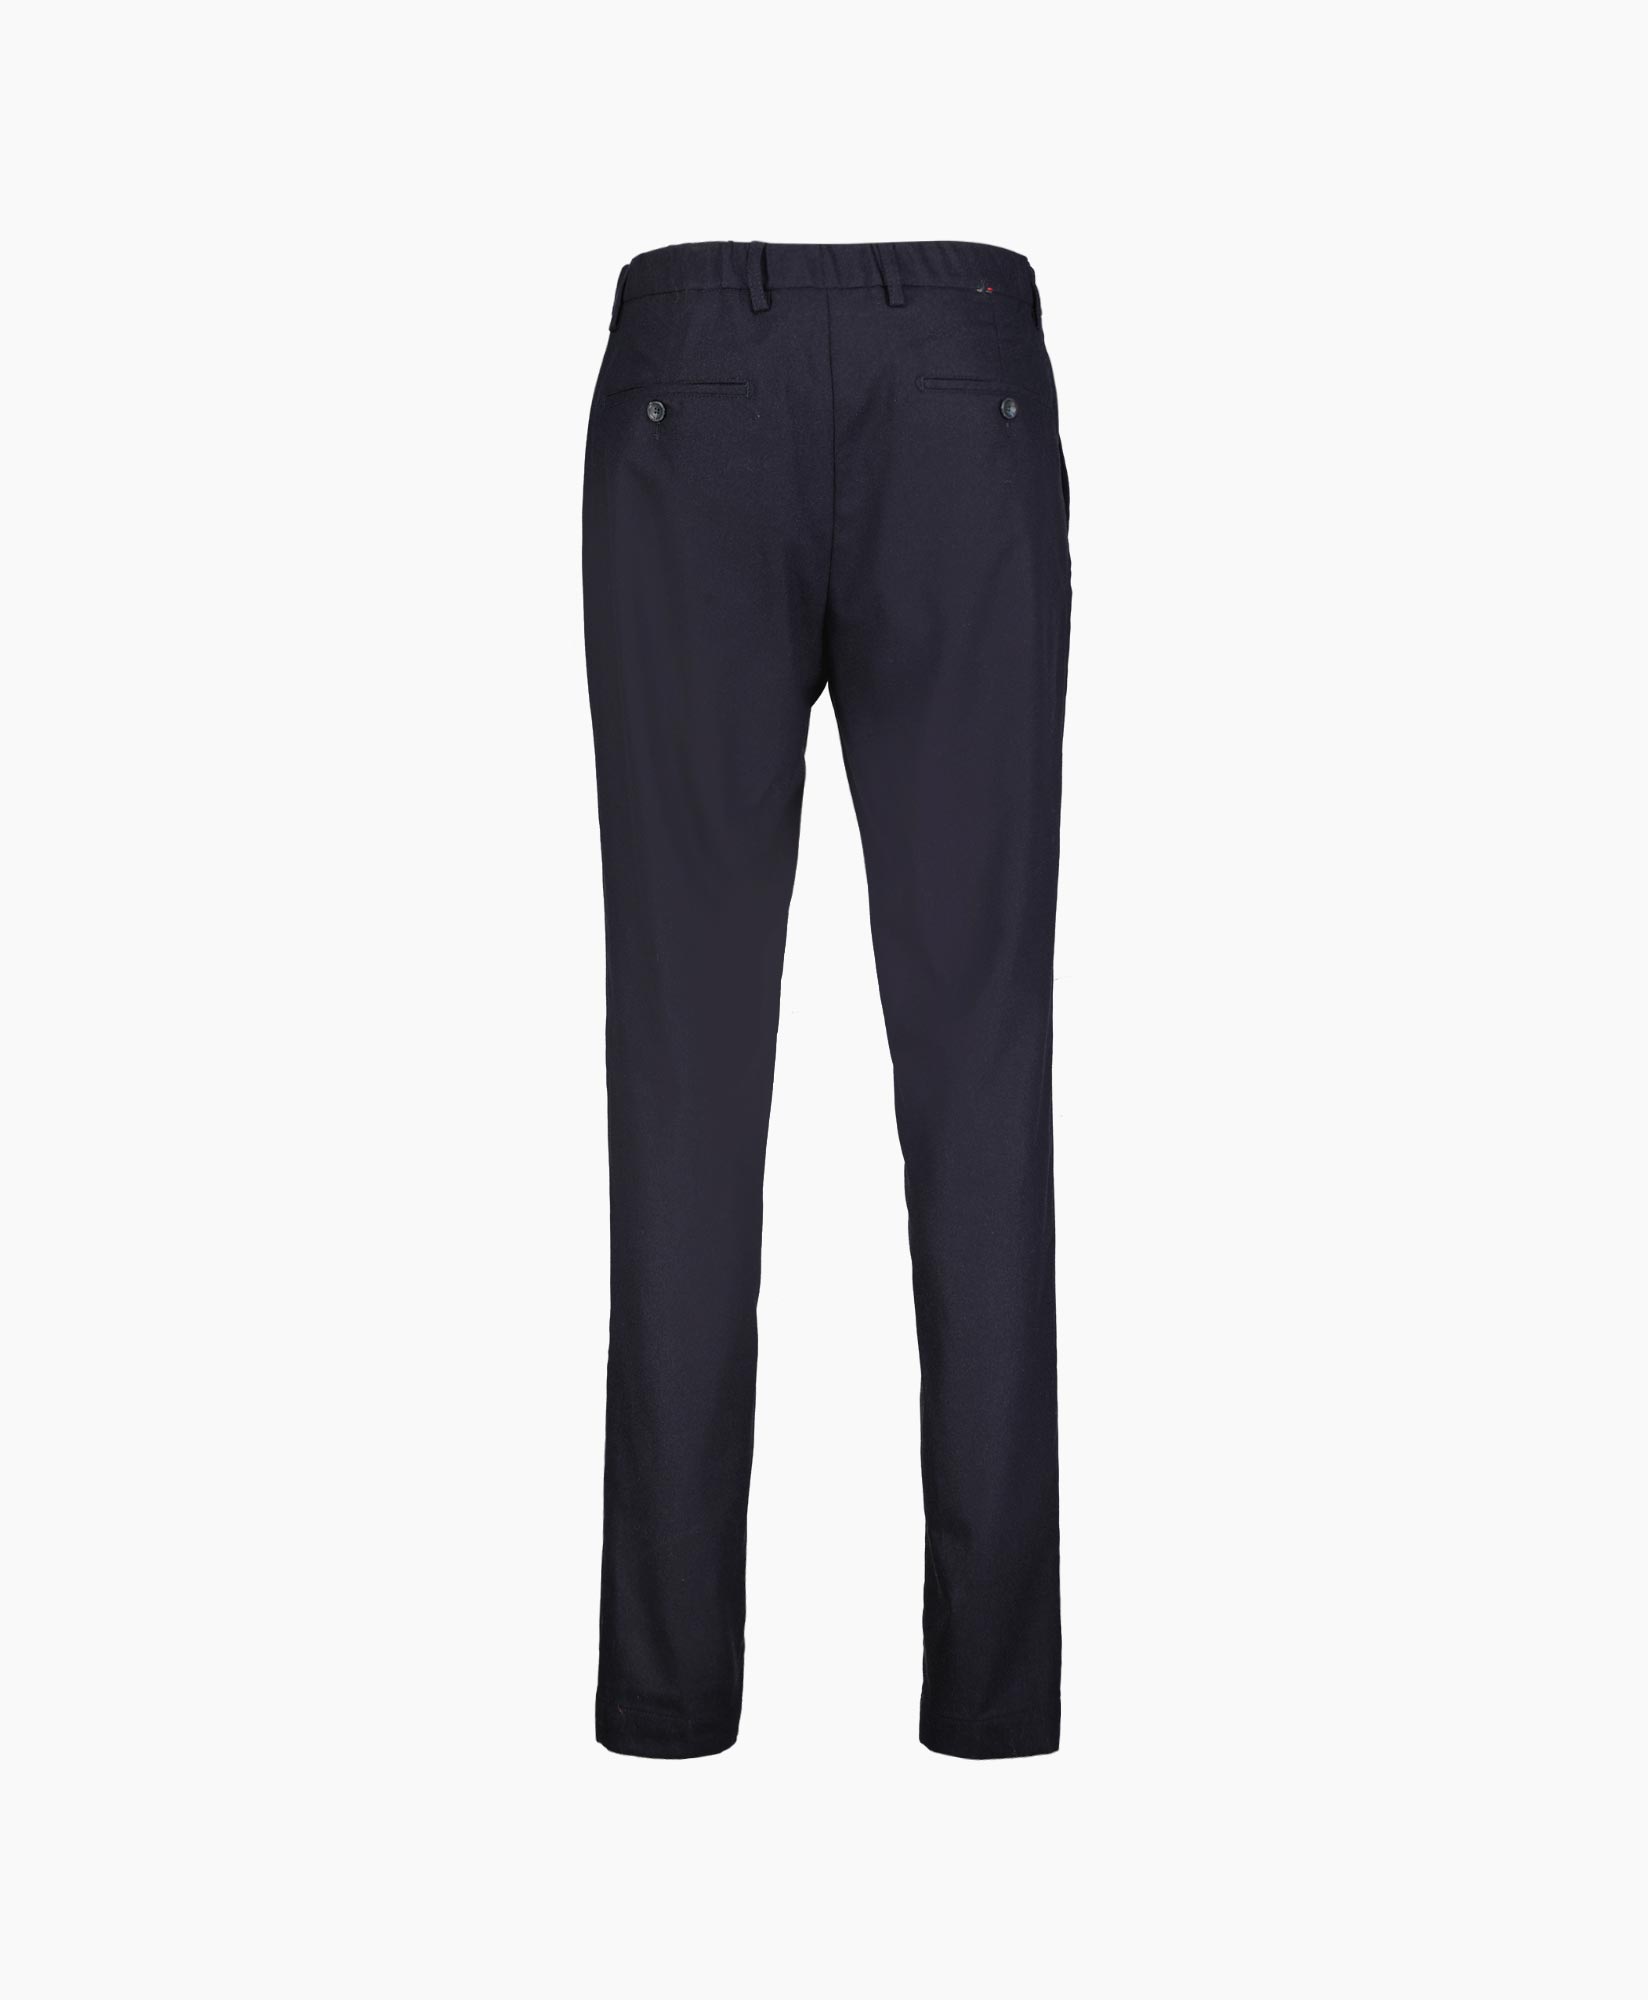 Pantalon Bros Zip 4829 Blauw